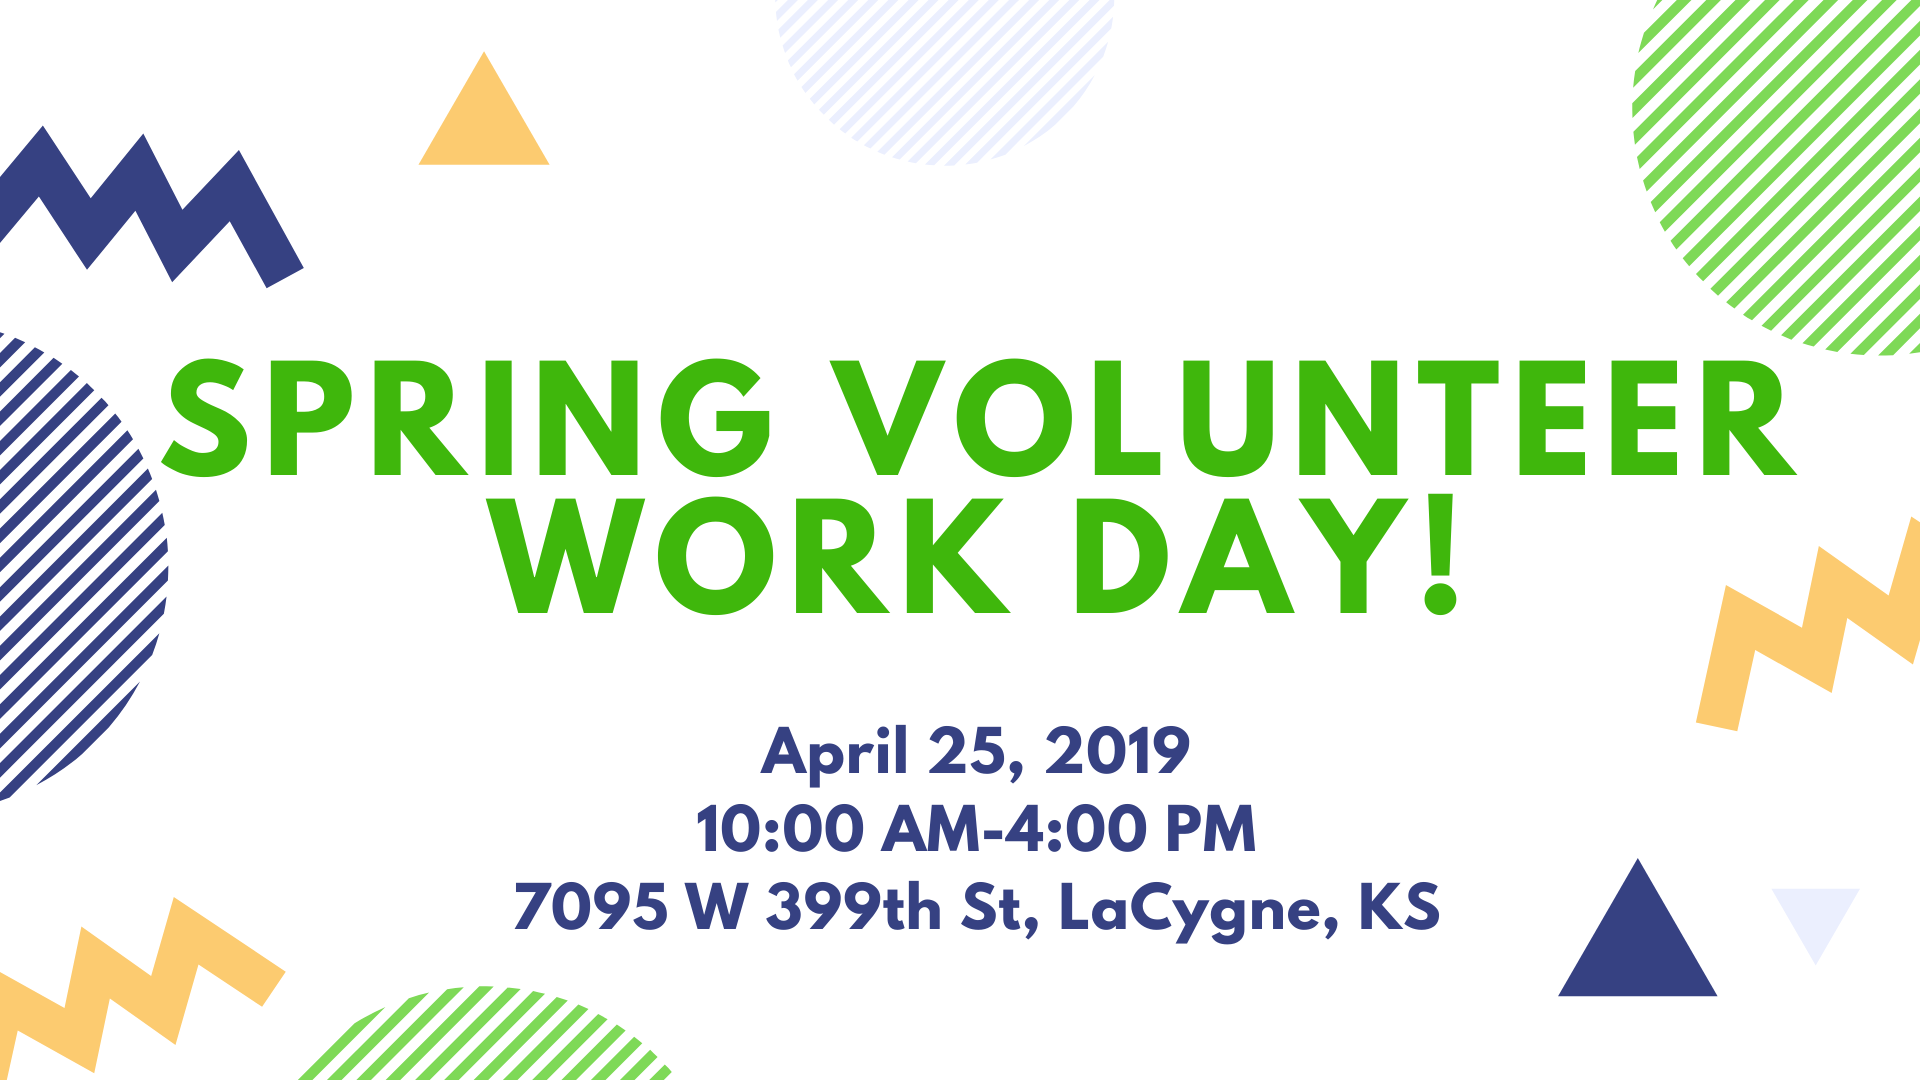 Spring volunteer work day details